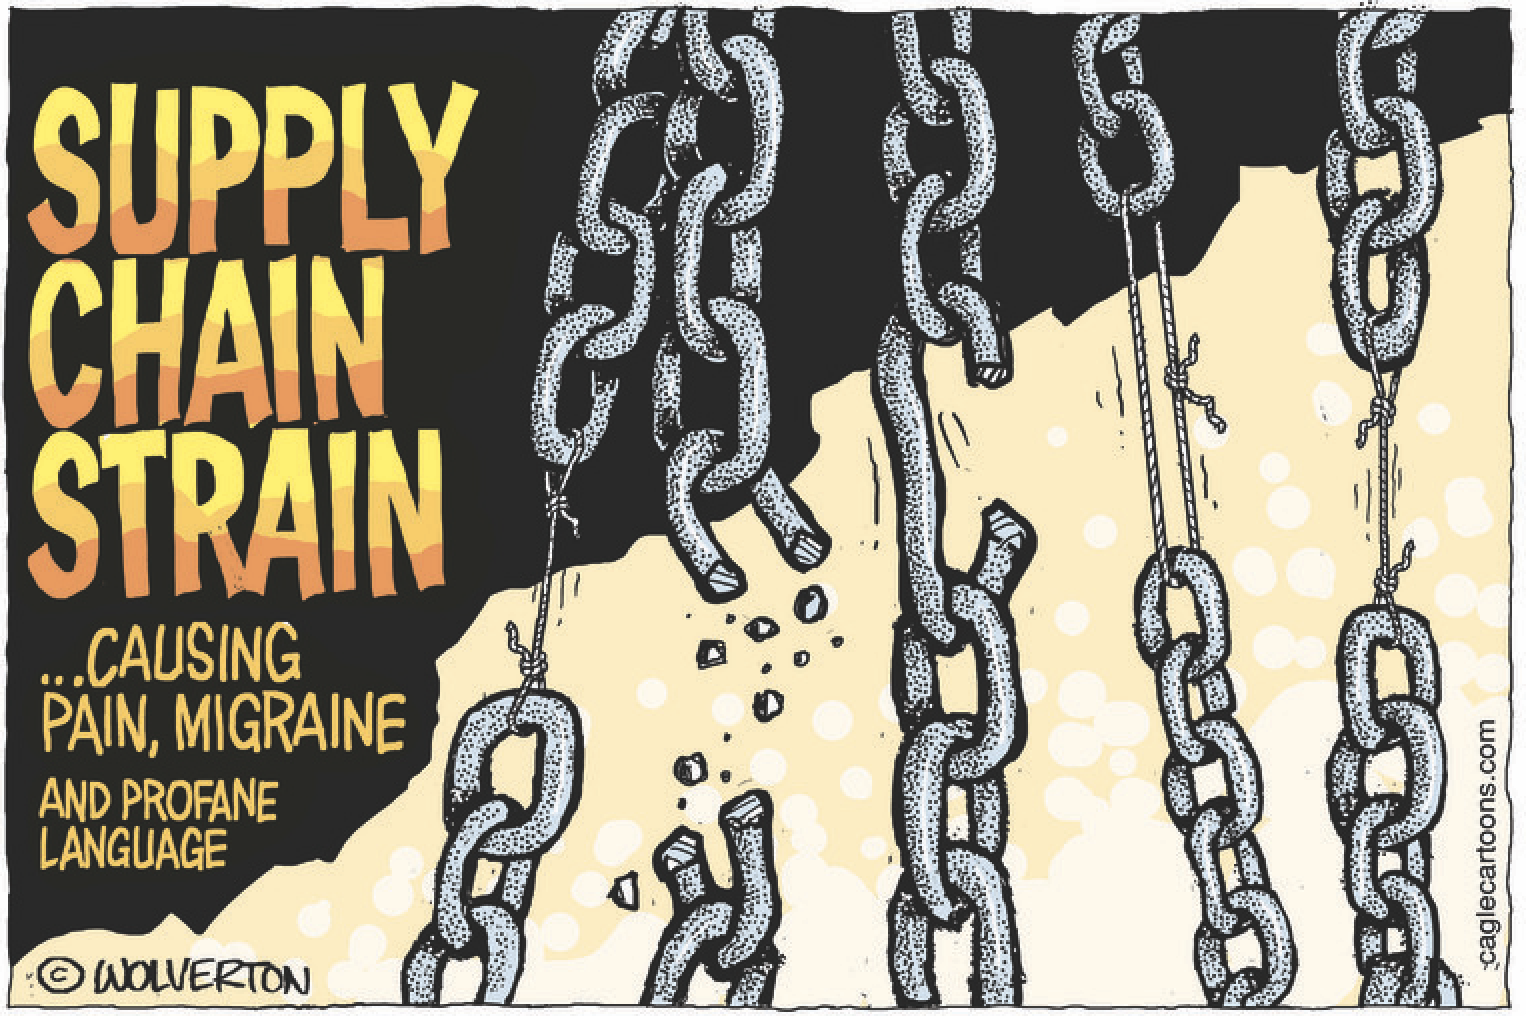 Supply chain strain